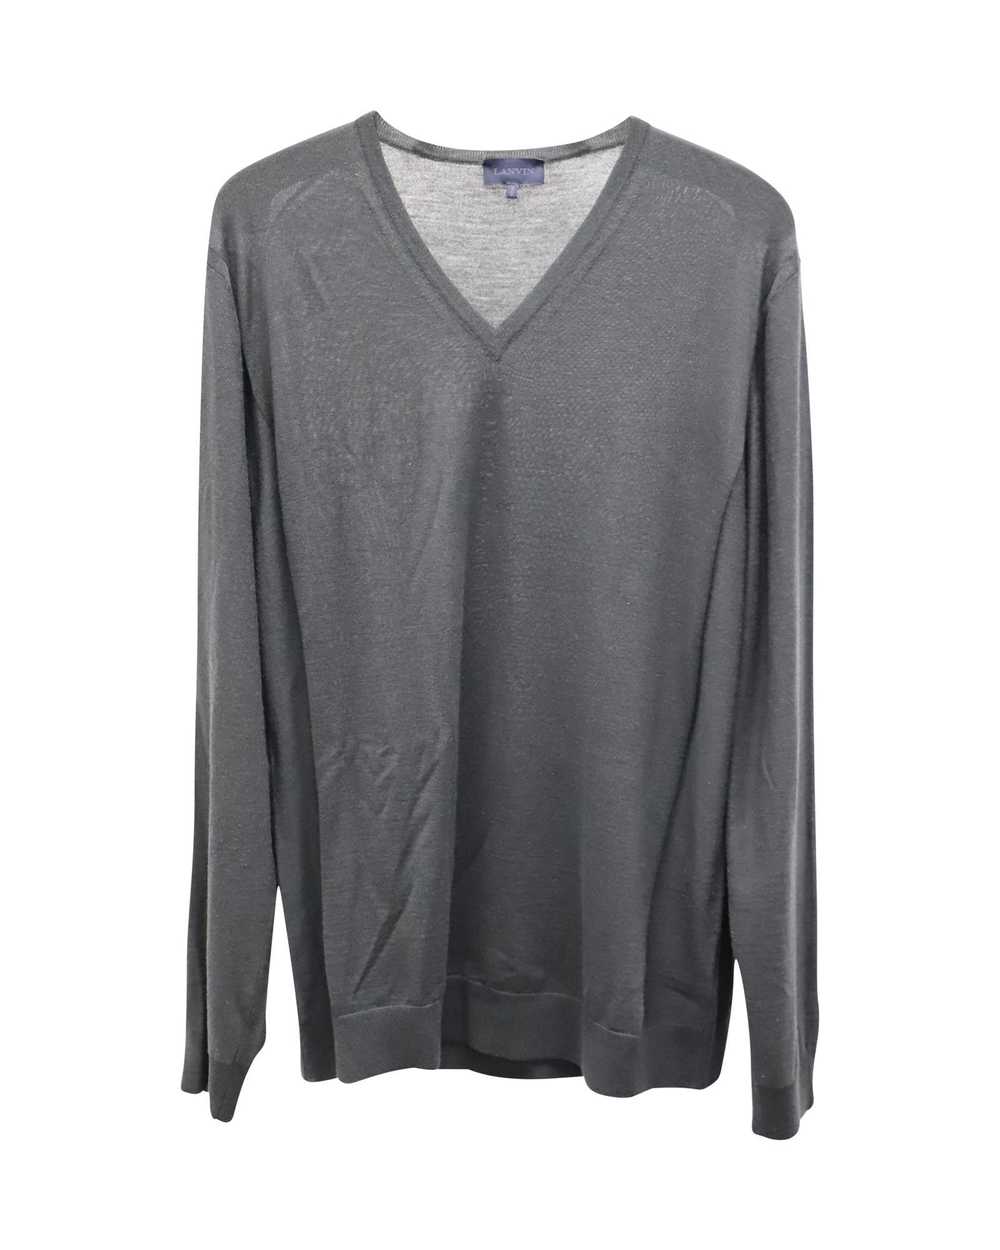 Lanvin Grey Merino Wool V-Neck Sweater for Men - image 1